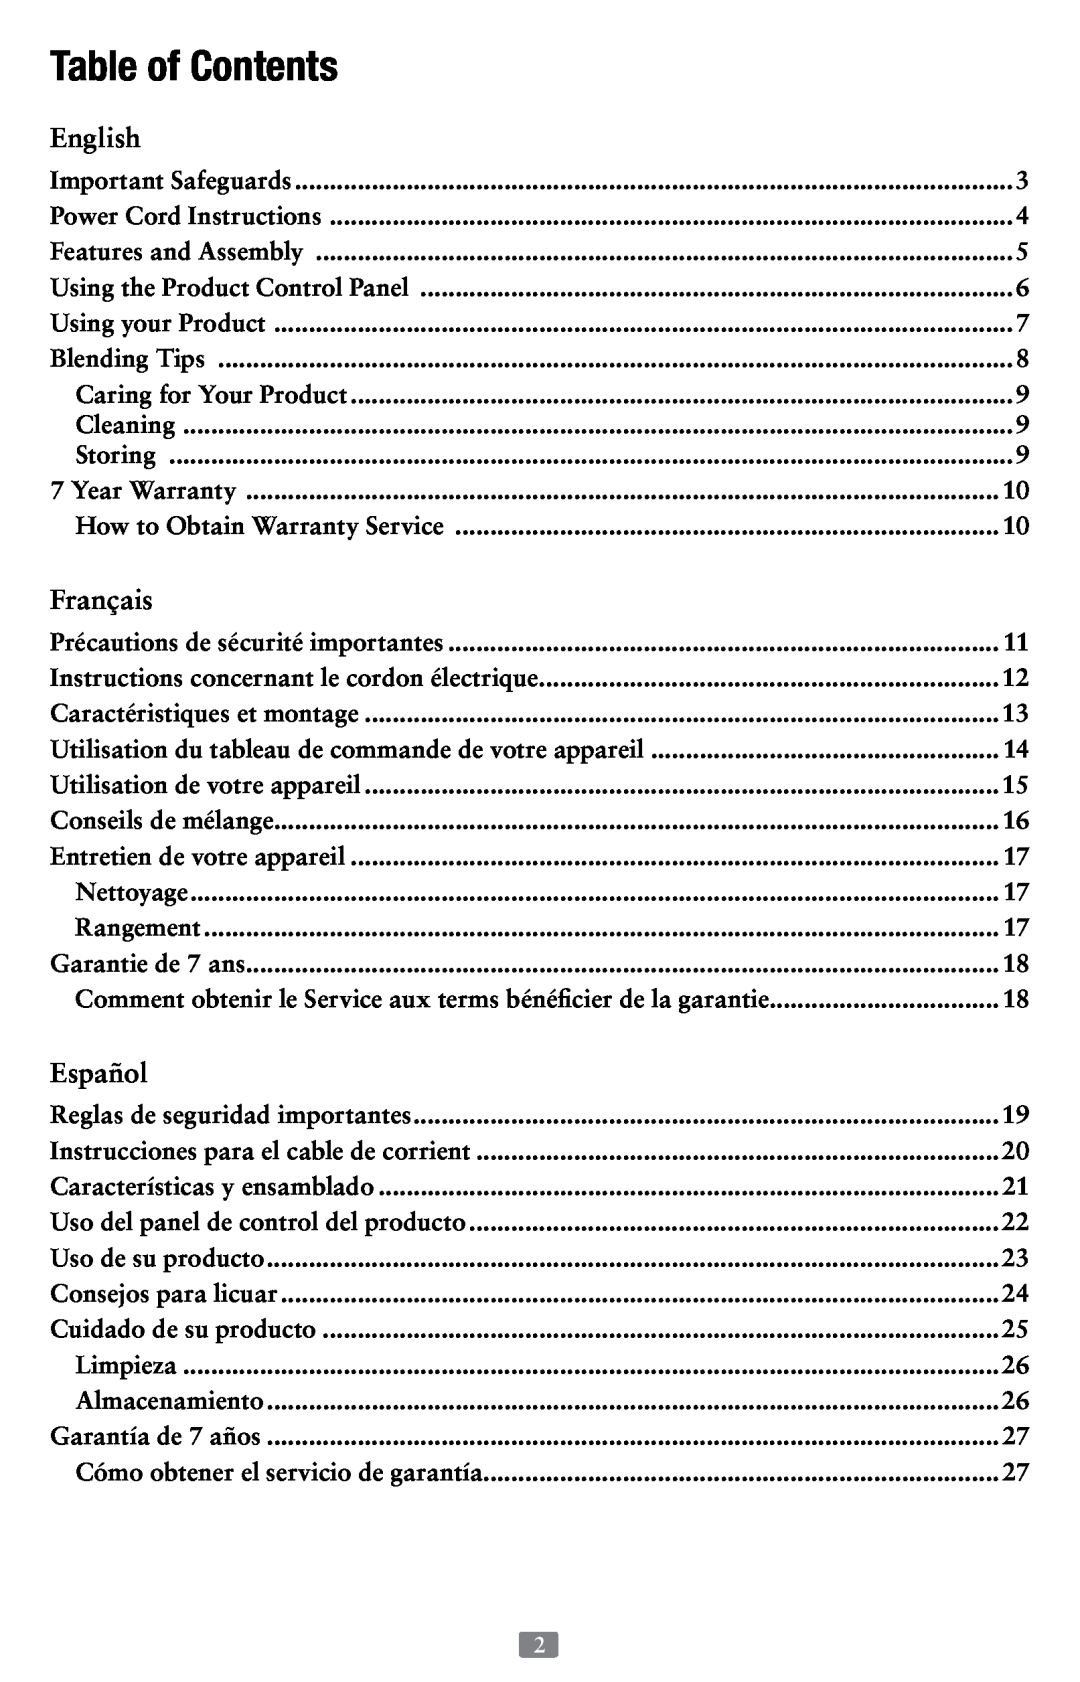 Oster 155876, Versa Performance Blender user manual English, Français, Español, Table of Contents 